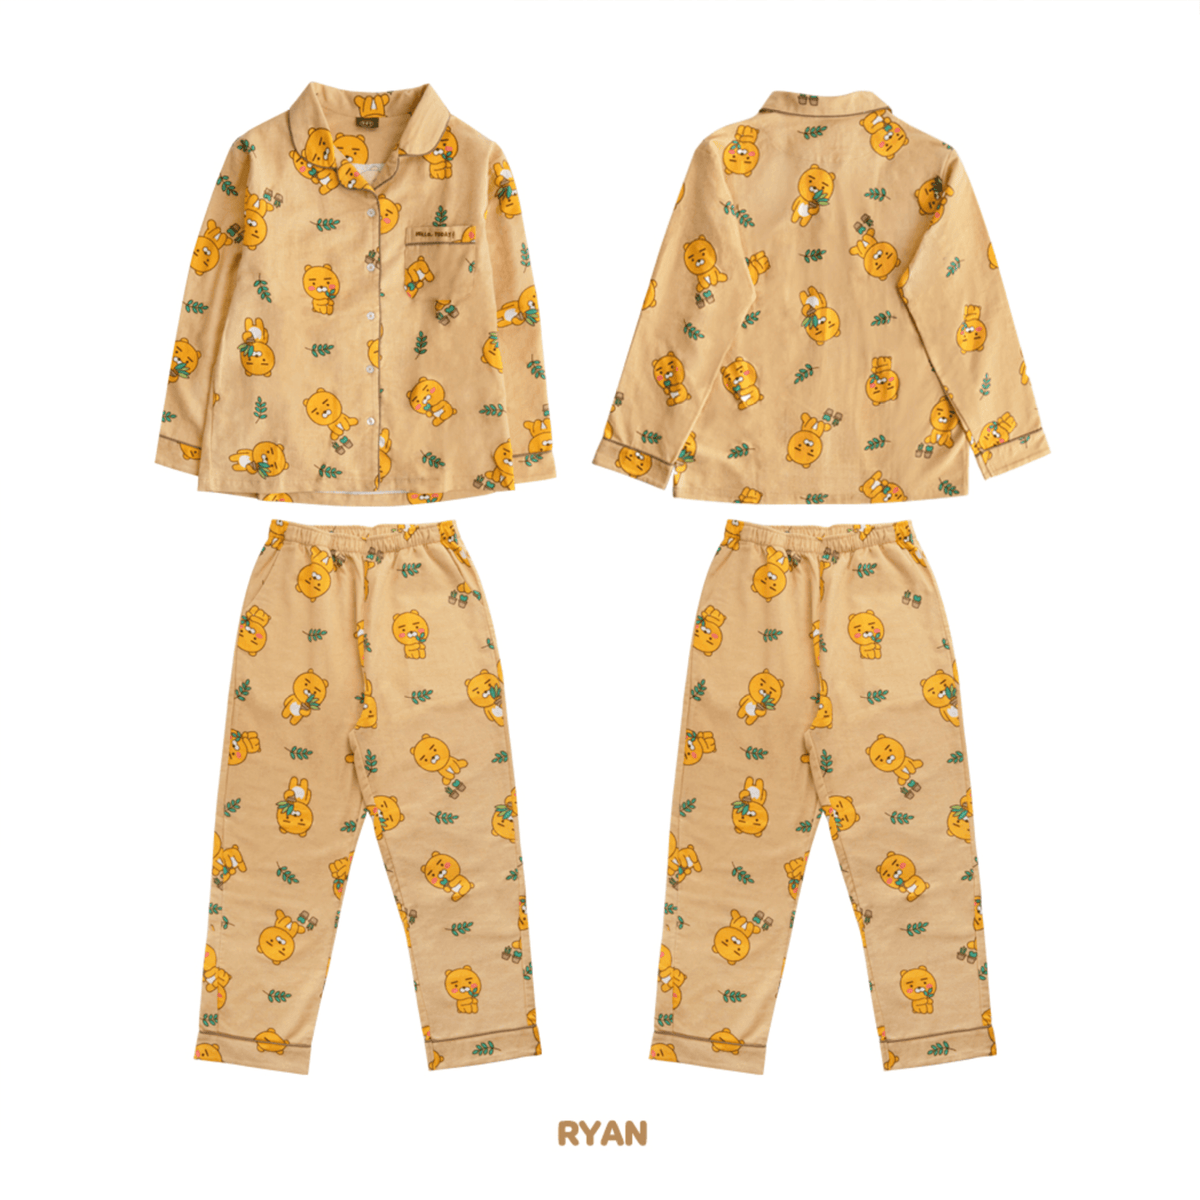 KAKAO FRIENDS Pajama Small Size Sleepwear 100% Cotton Clothes Set - SkoopMarket